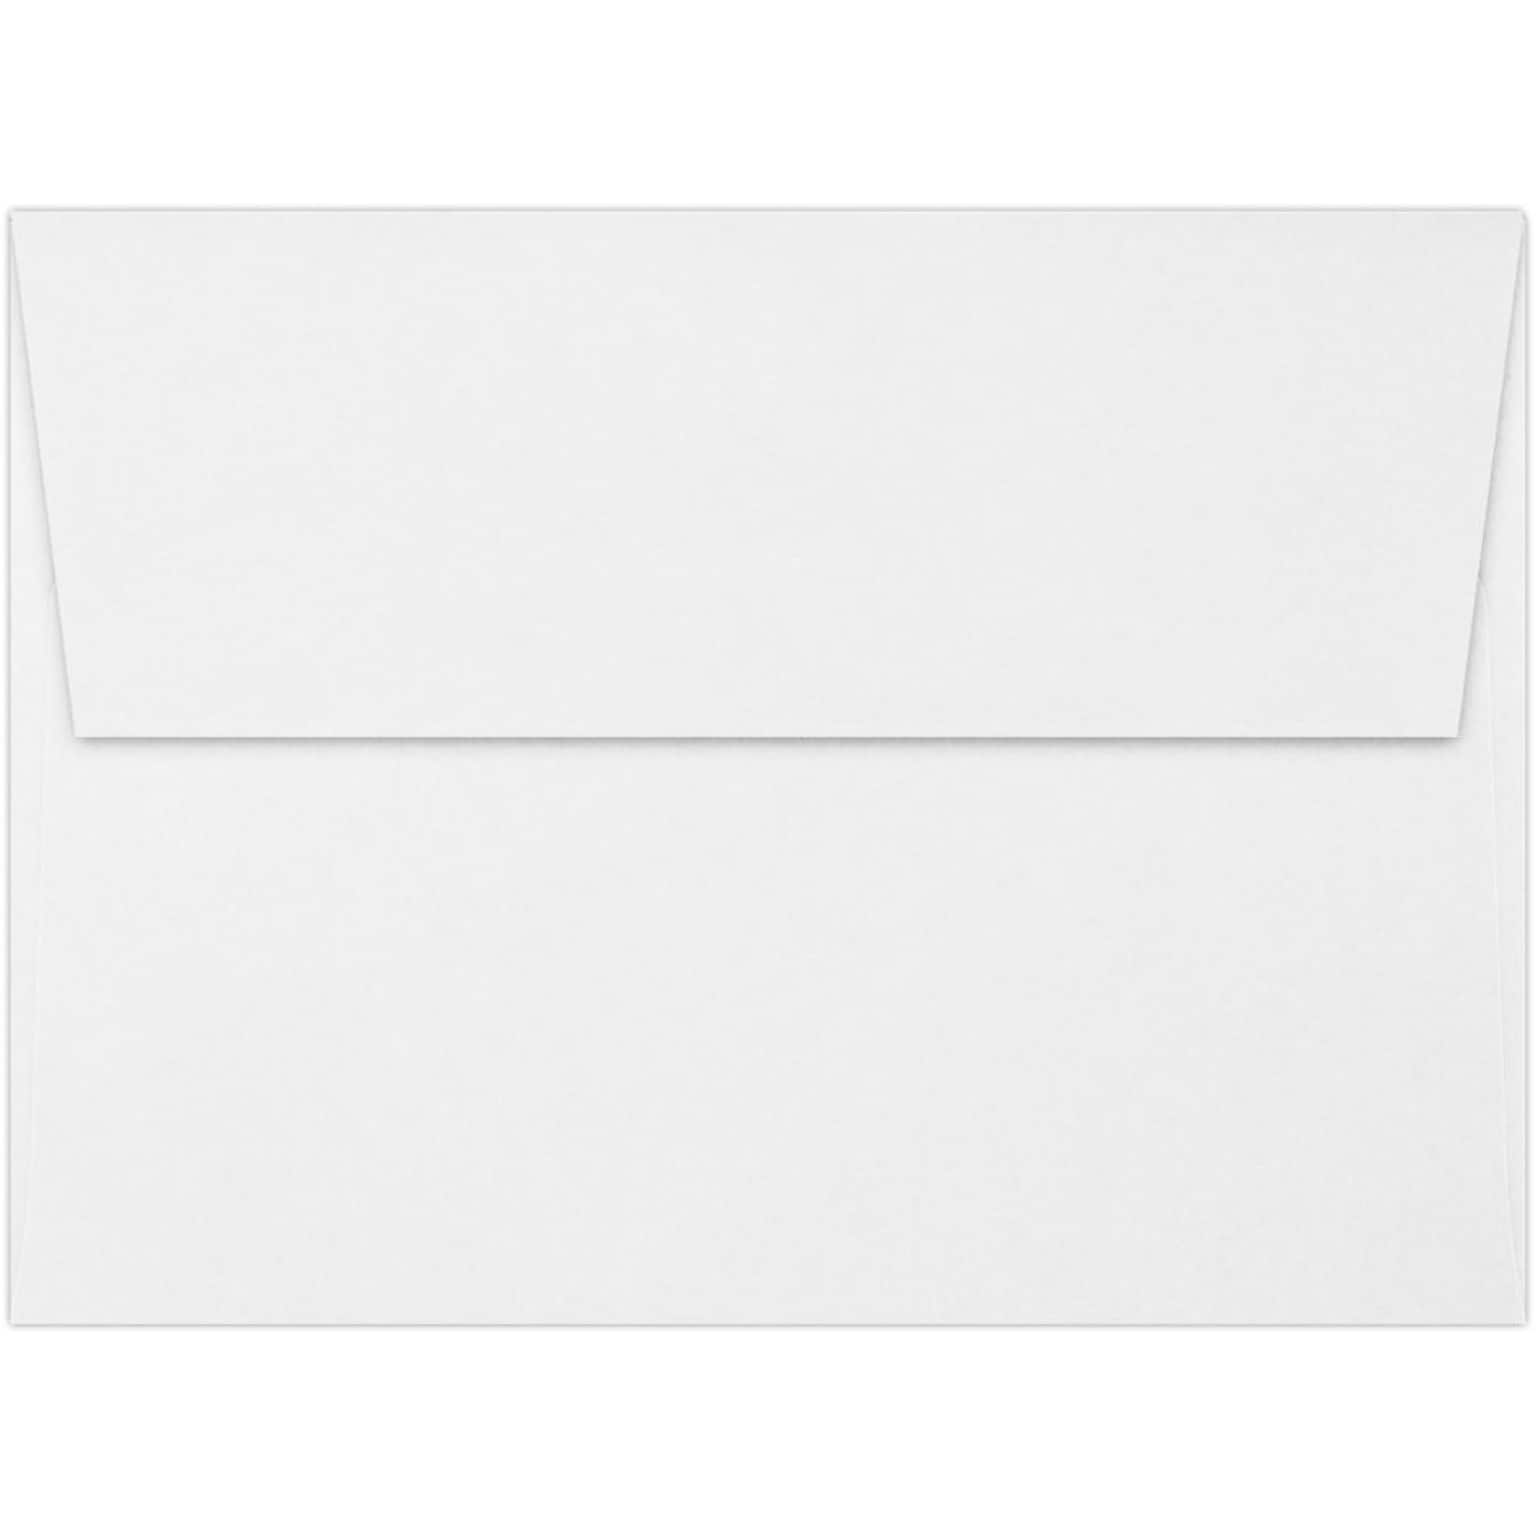 LUX A7 Invitation Envelopes (5 1/4 x 7 1/4) 50/Pack, Classic Crest® Whitestone (4880-70WS-50)